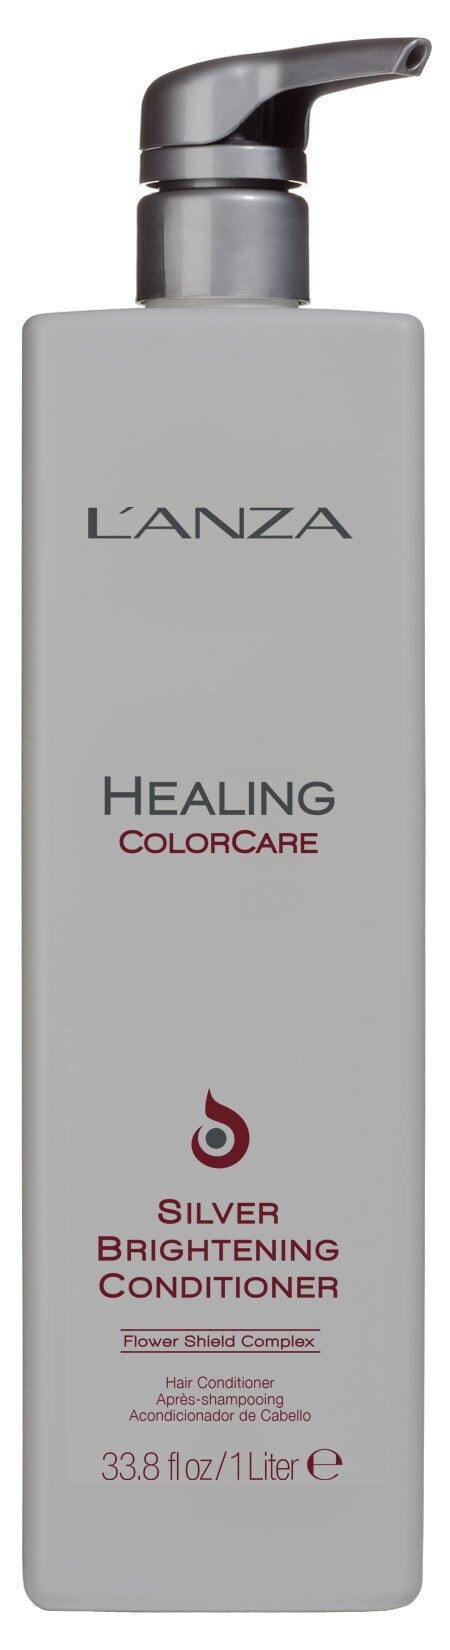 Lanza Healing Colorcare Silver Brightening Conditioner Ltr